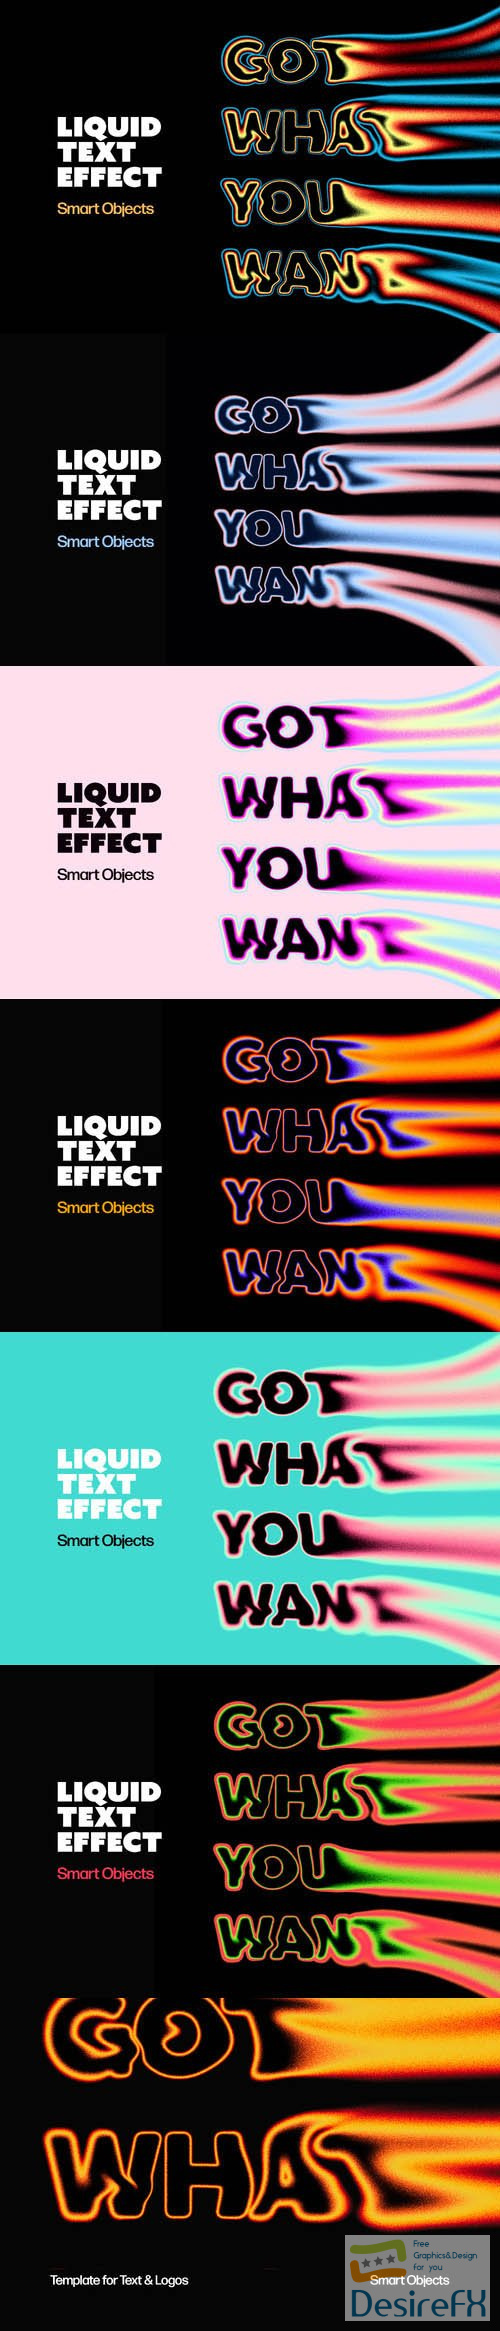 PSD illusion liquid text effect